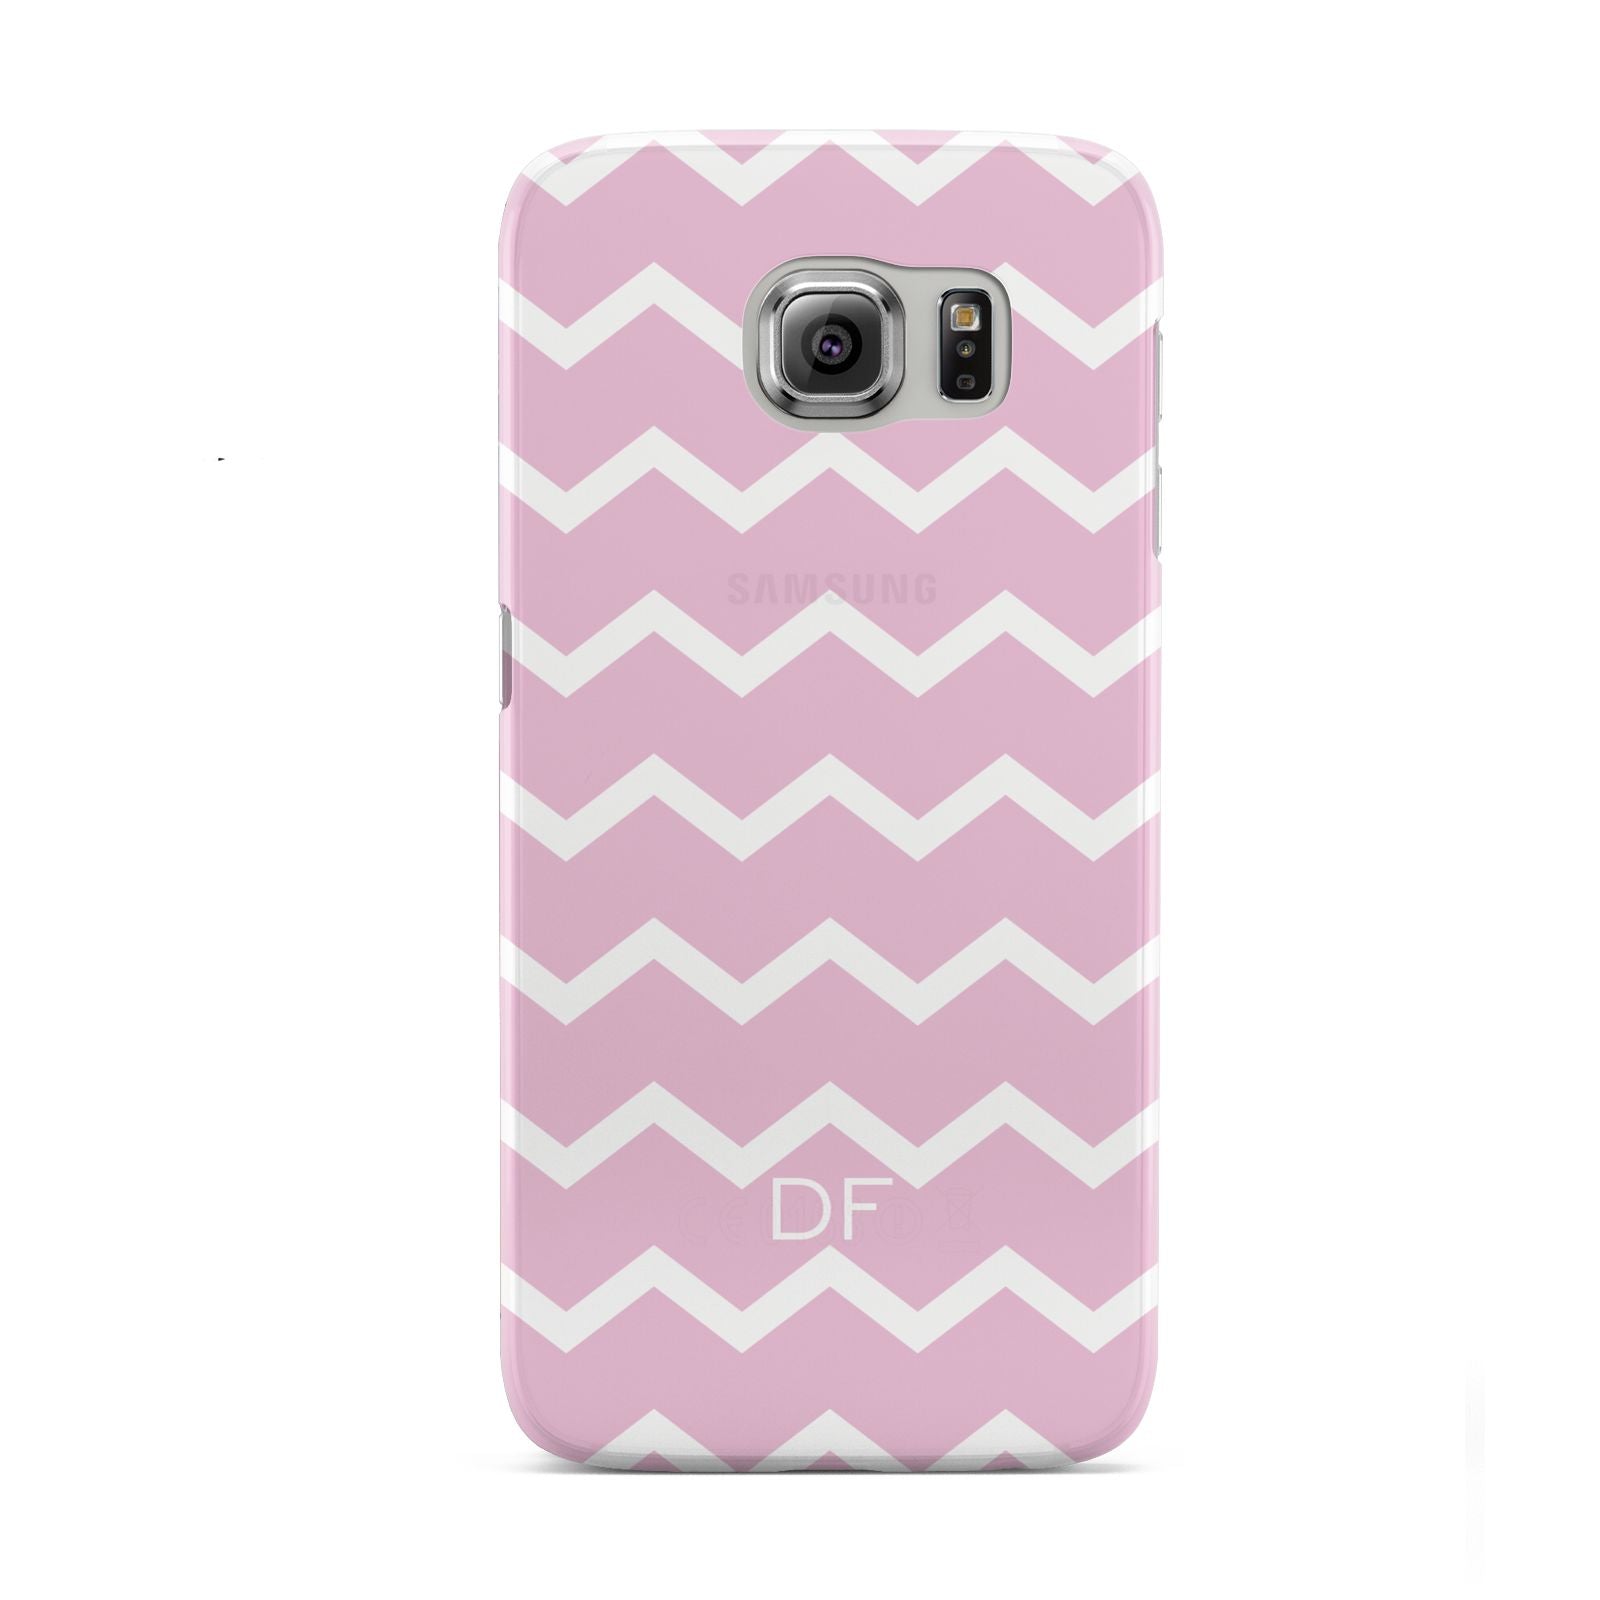 Personalised Chevron Pink Samsung Galaxy S6 Case